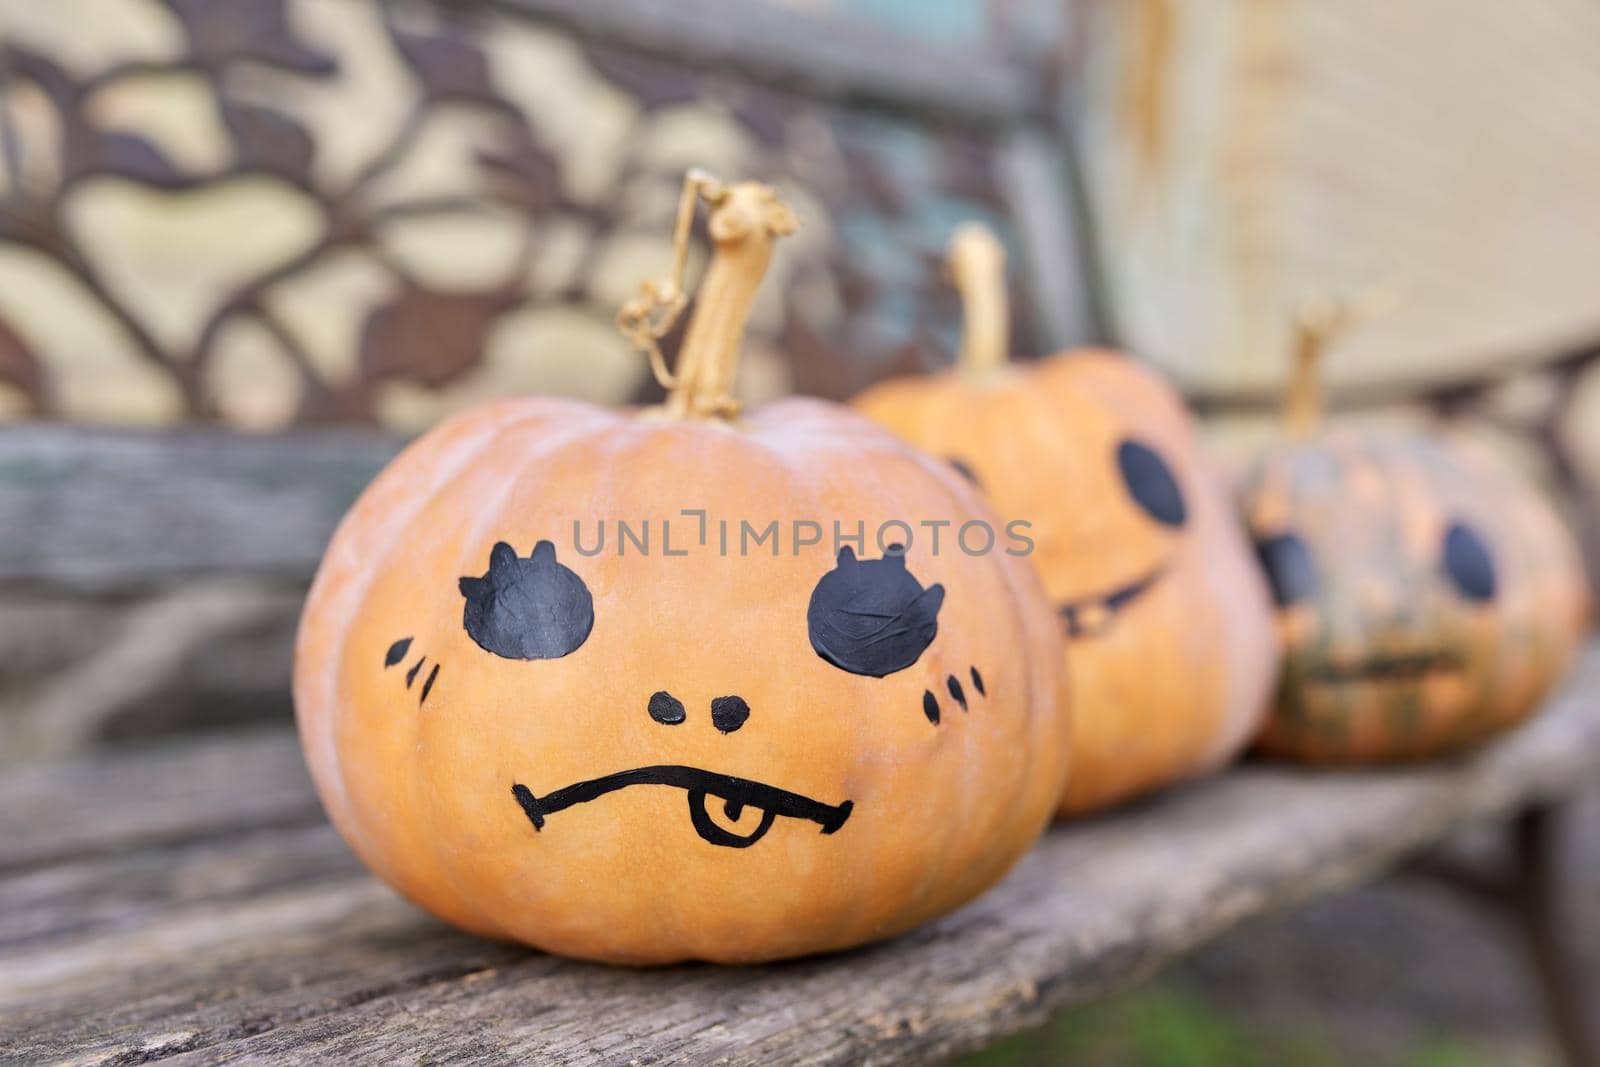 Halloween three pumpkins outdoor, nobody, on wooden old bench by VH-studio